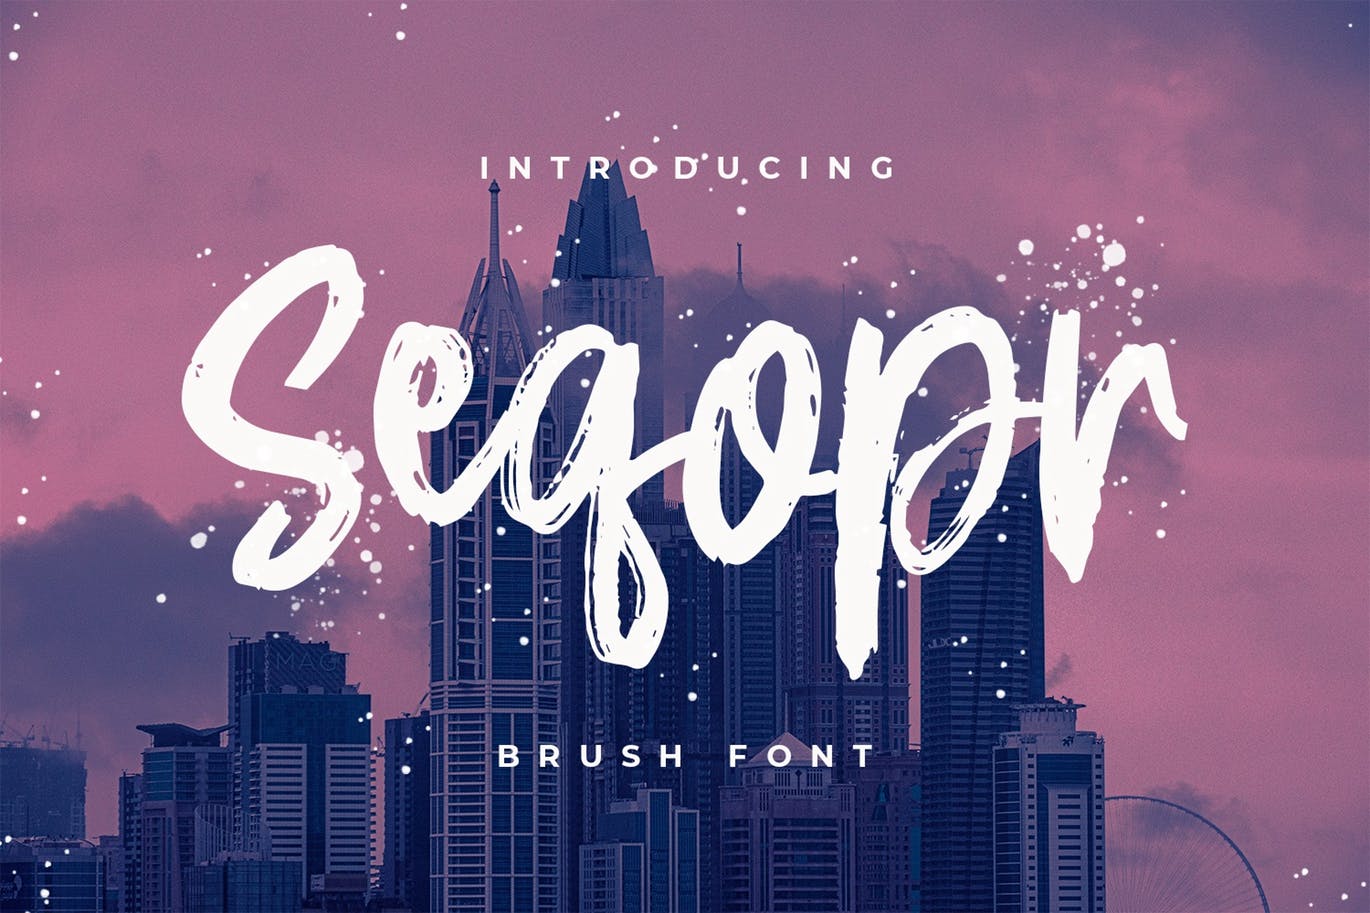 Logo/印刷设计英文笔刷字体非凡图库精选 Seqopr – The Brush Font插图